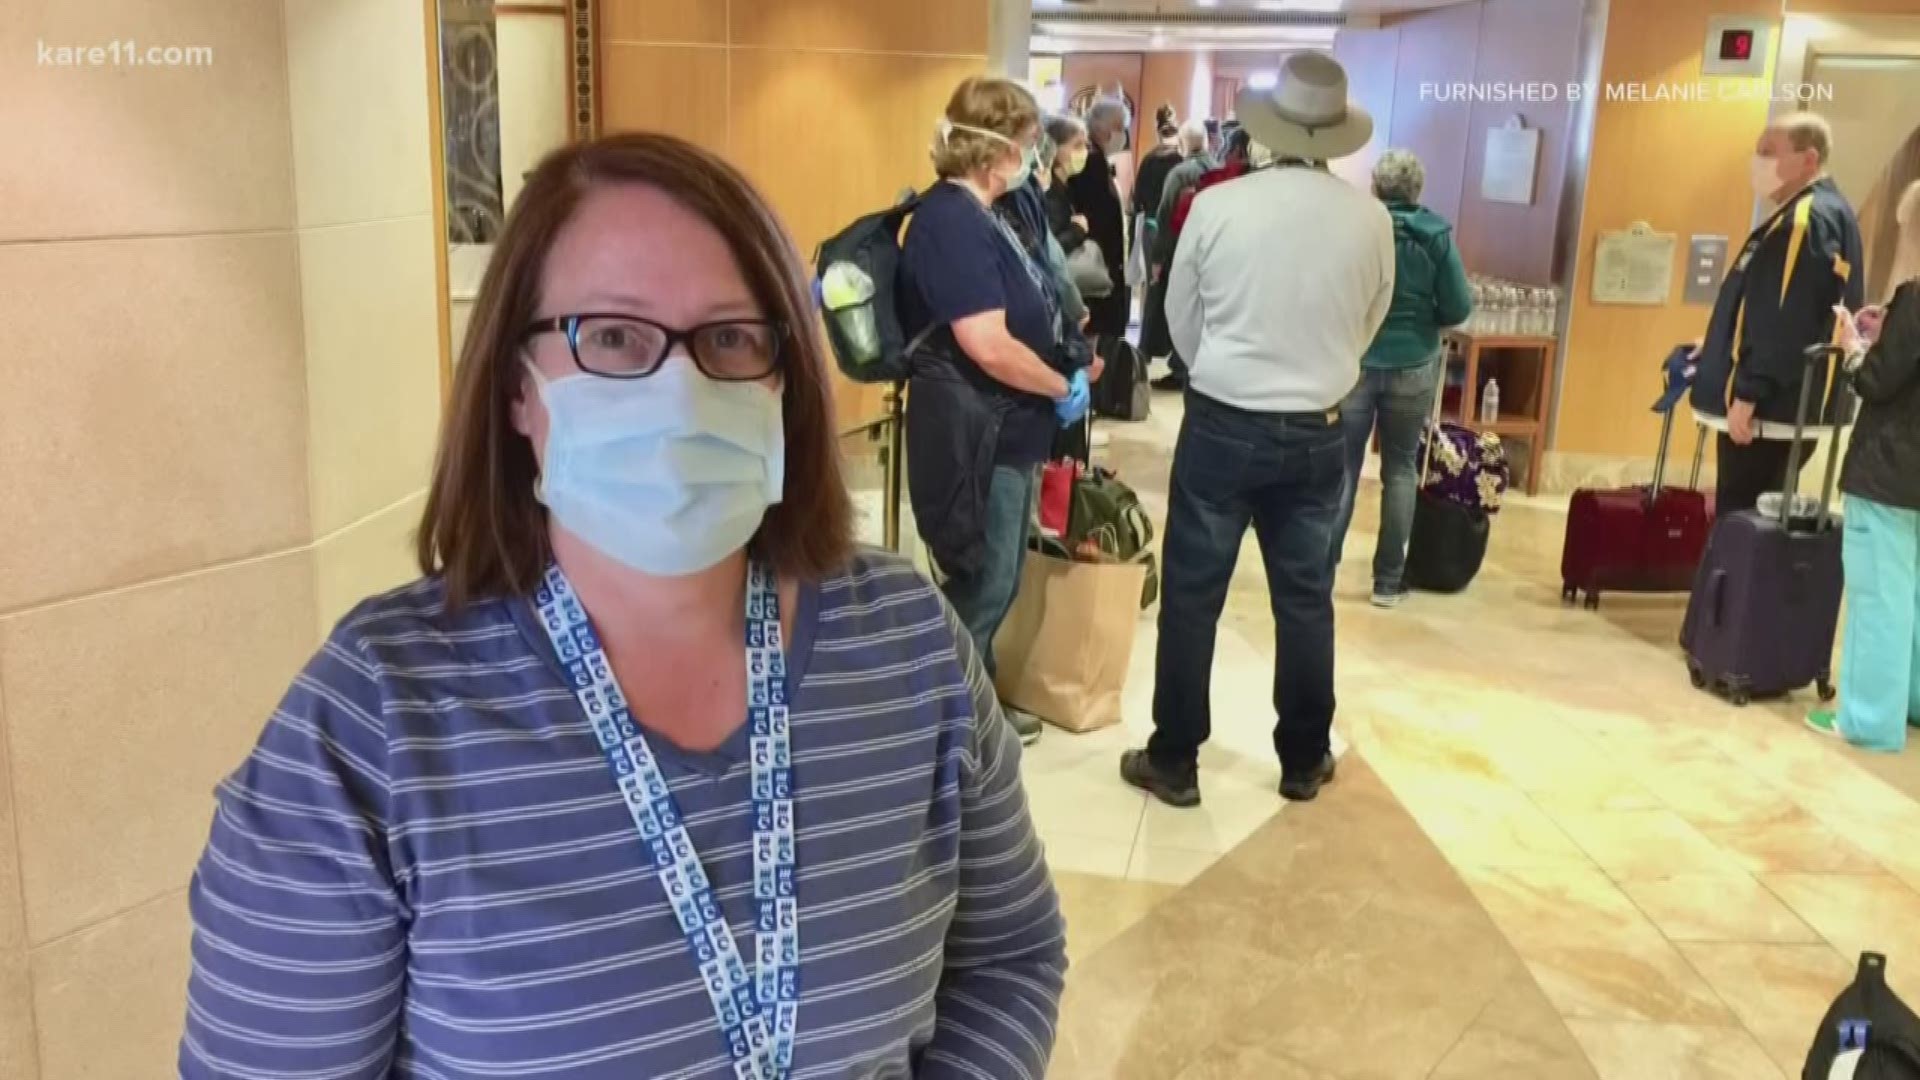 Melanie Carlson said she was told to serve her 14-day mandatory quarantine at Dobbins Air Reserve Base in Marietta, Georgia.